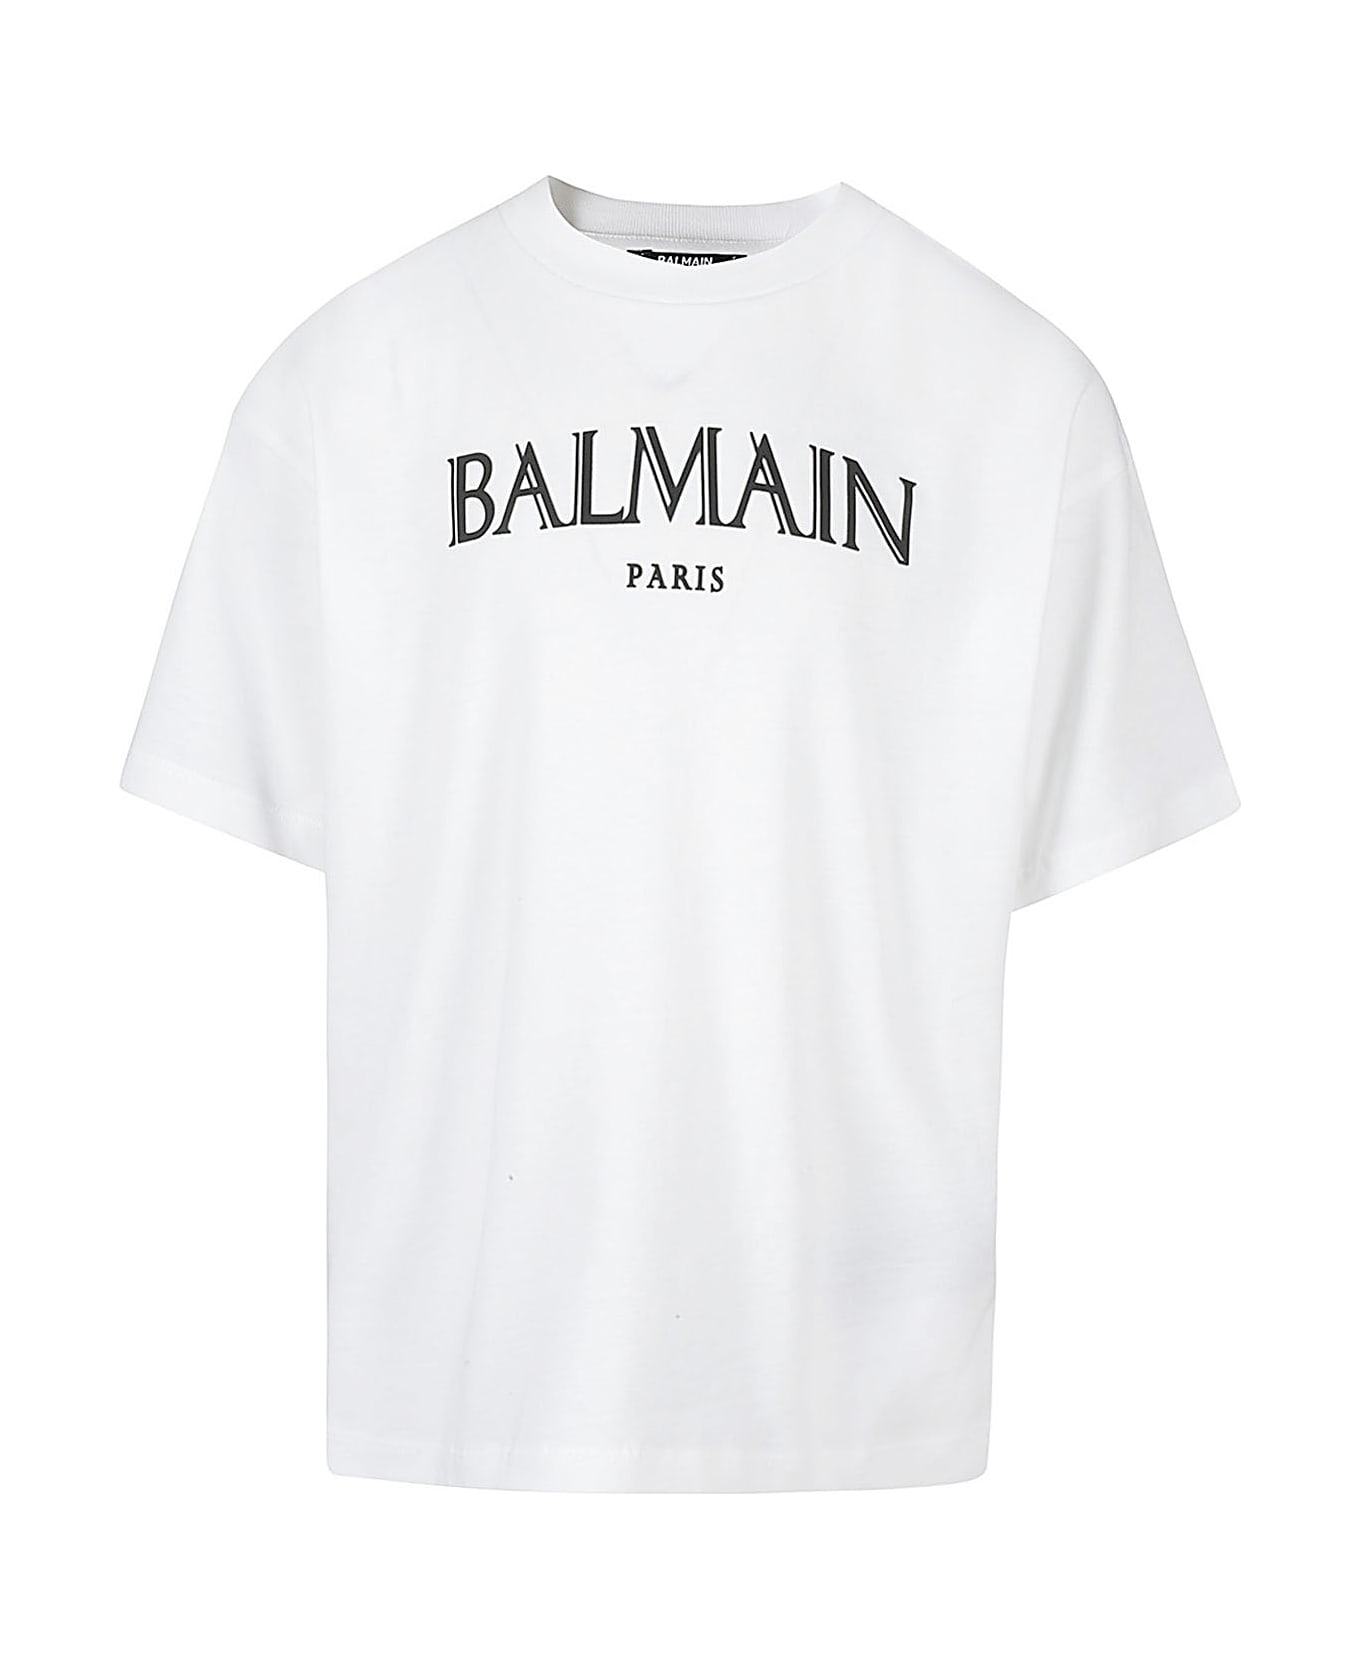 Balmain Tshirt - Ne White Black